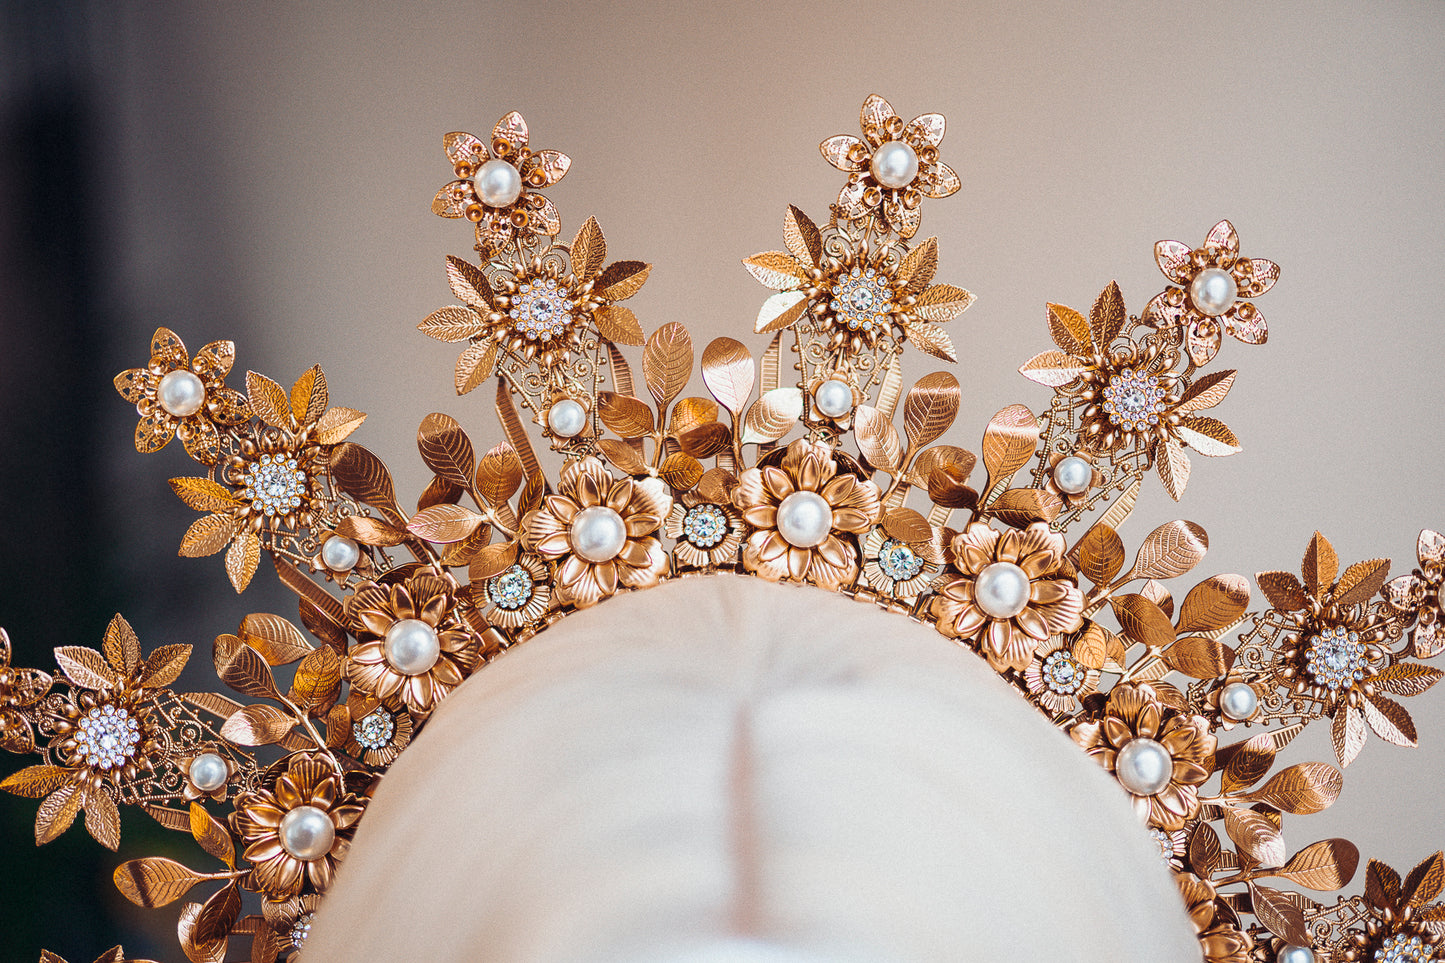 Load image into Gallery viewer, Beige Halo Crown Wedding Headpiece
